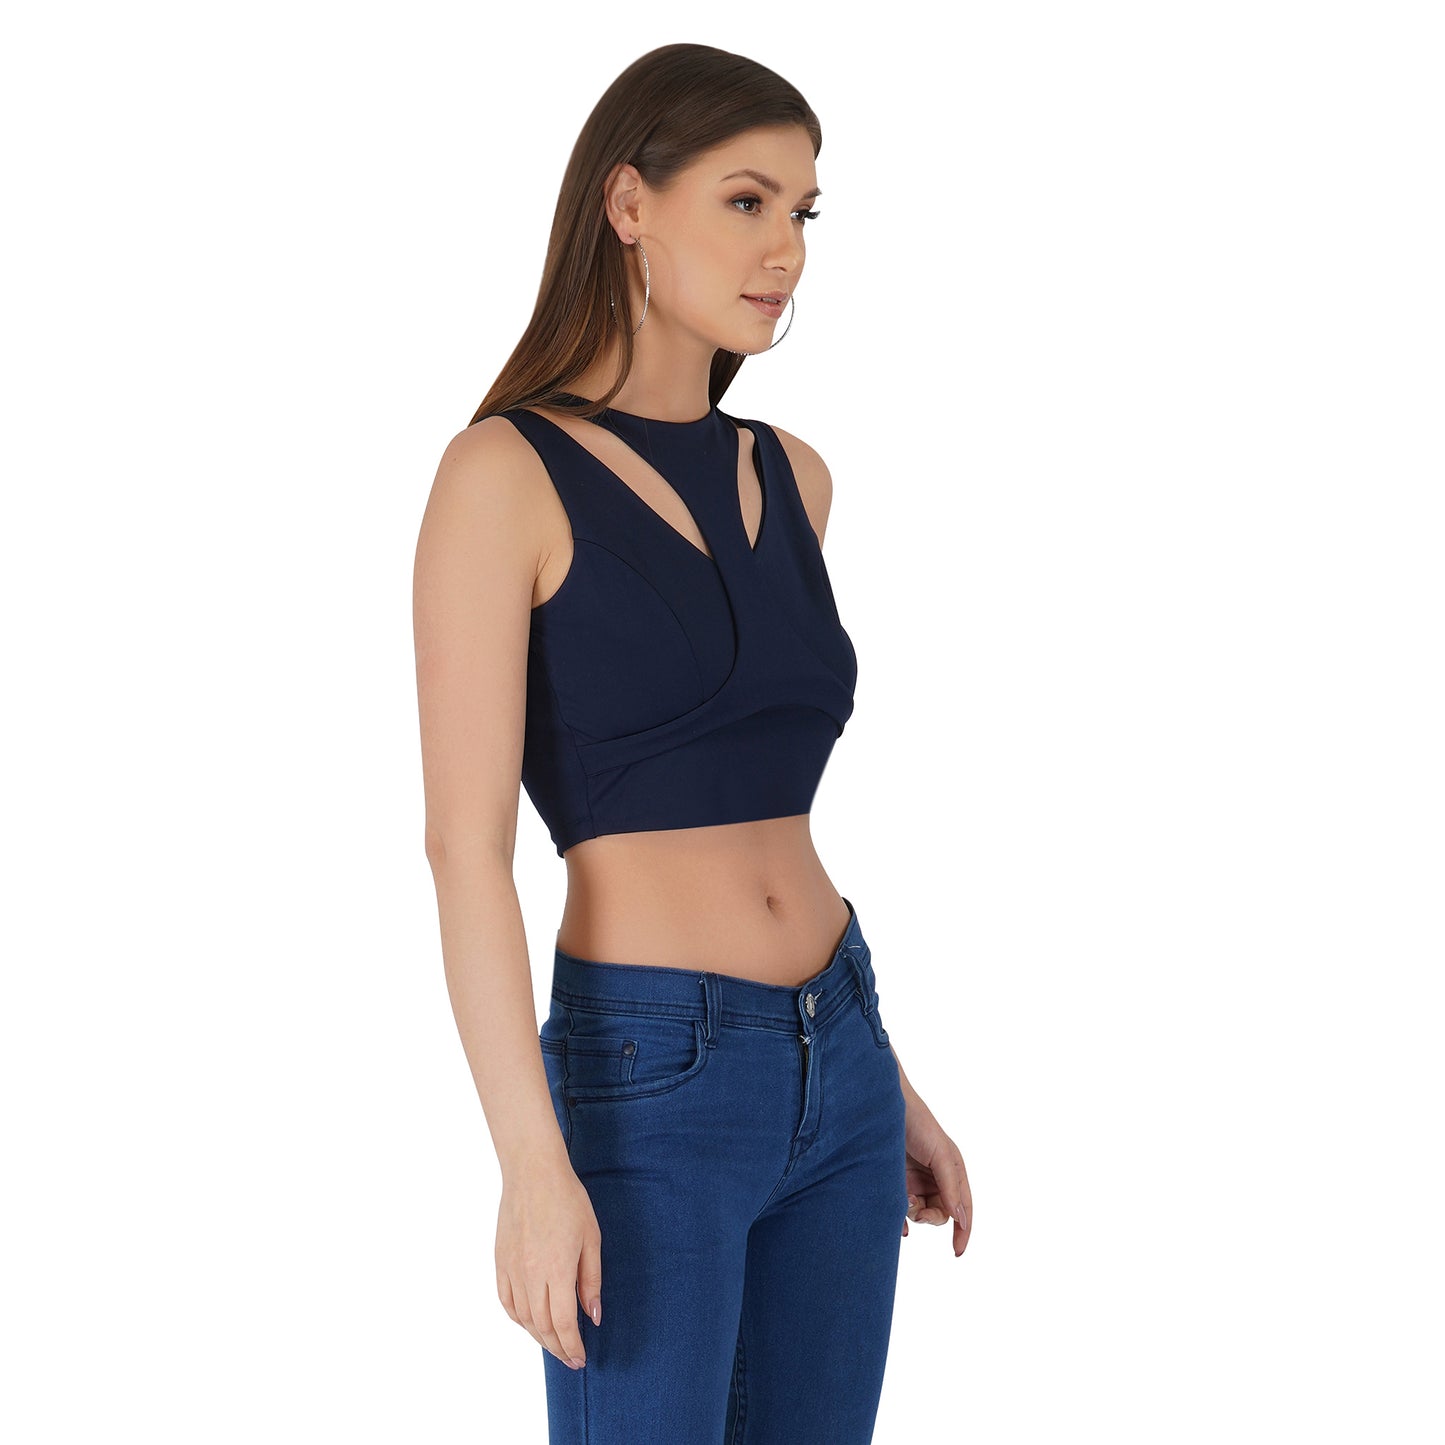 SLAY. Women's Navy Blue Sleeveless Asymmetric Crop Top